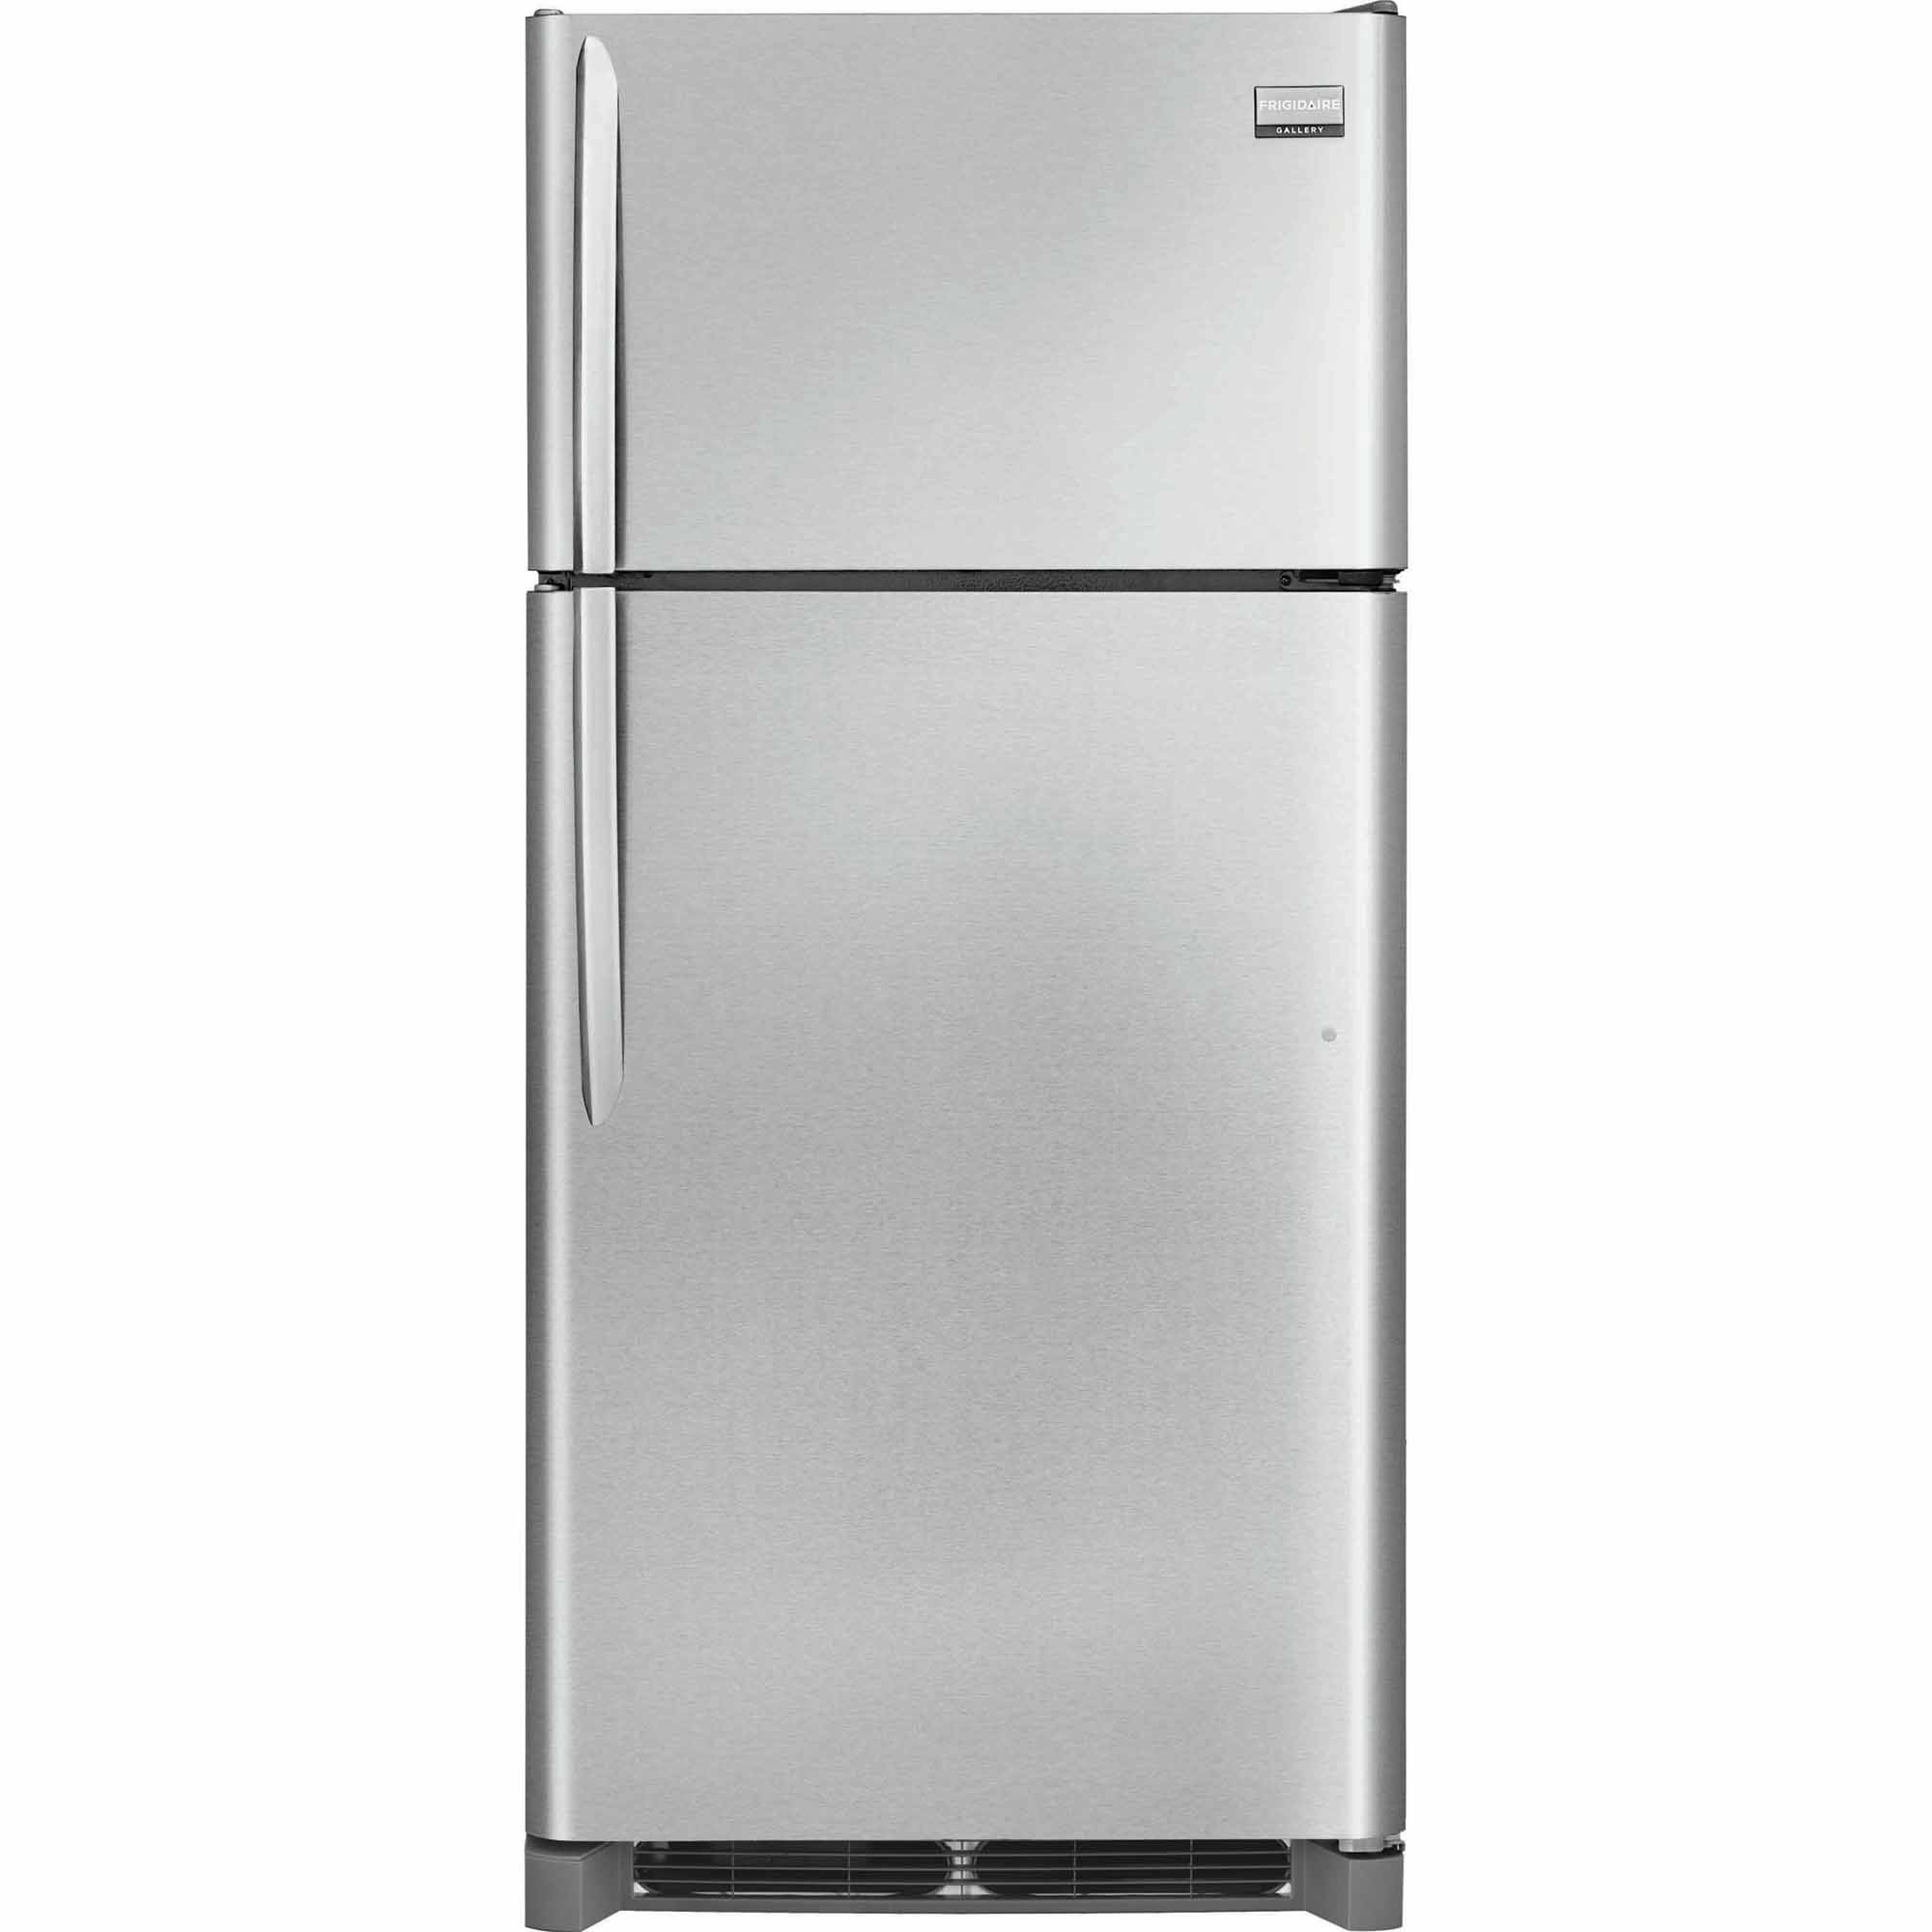 Frigidaire Gallery FGTR1845QF 18 cu. ft. Top Freezer Refrigerator Frigidaire Refrigerator Stainless Steel Top Freezer